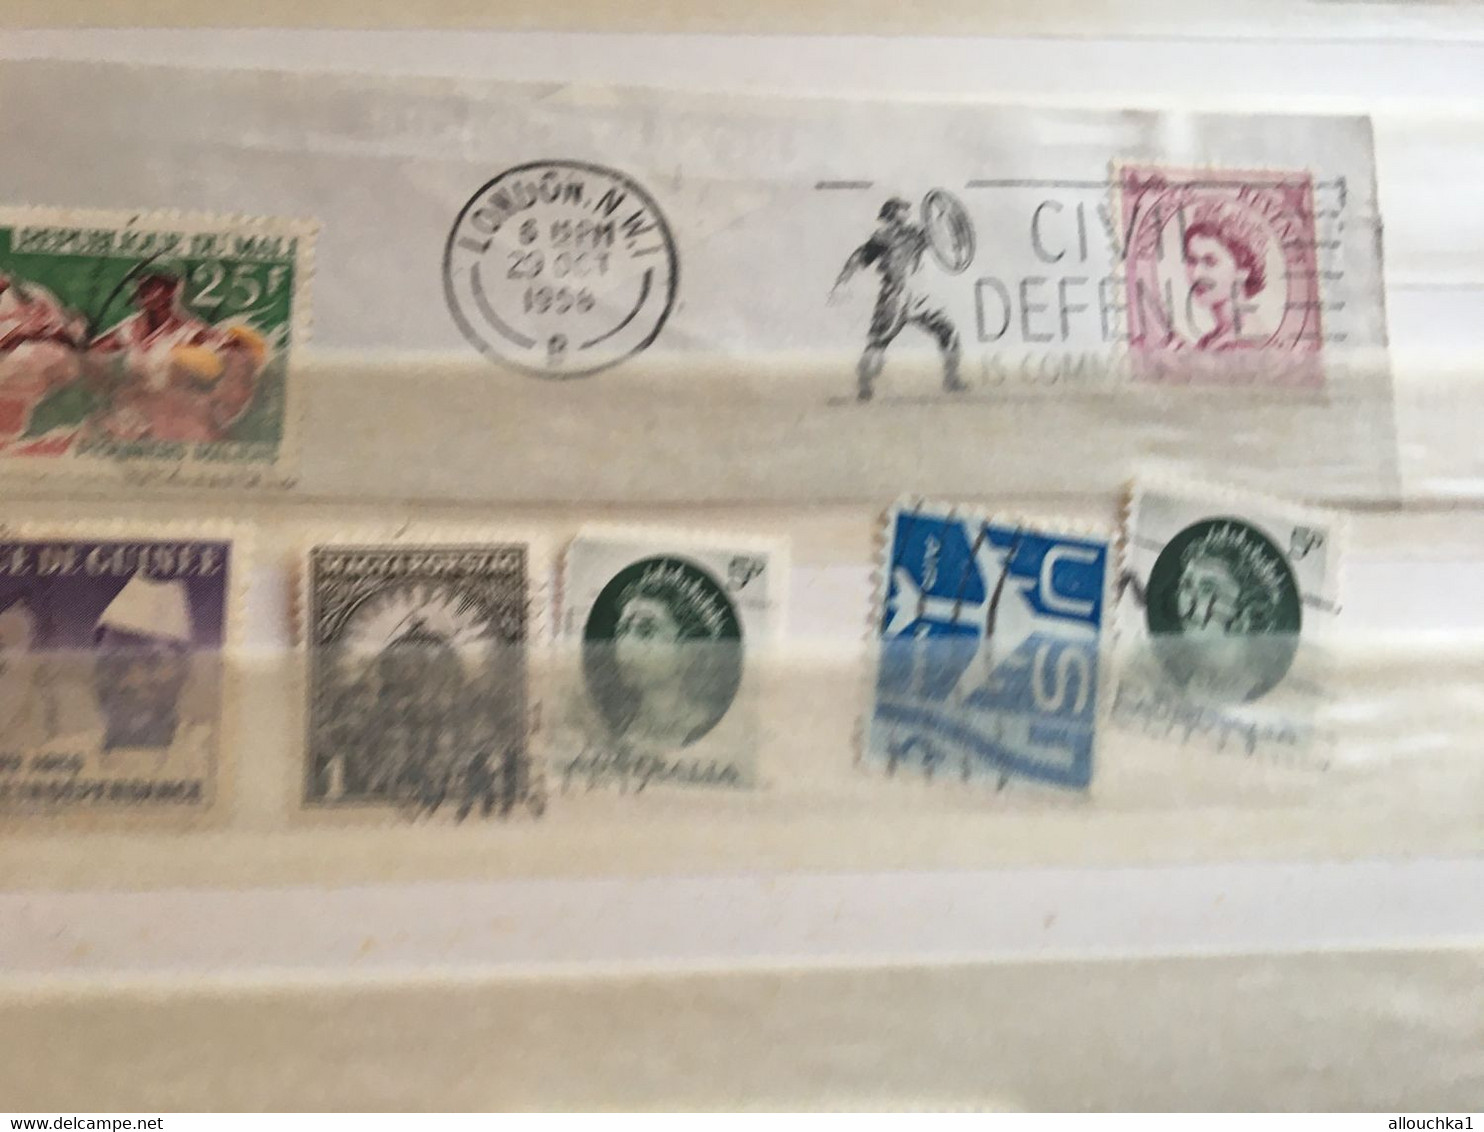 19 Timbres-☛3 Helvetia NSG-☛Iraq-☛-2 USA- série 6 Stamps * K.u.K Feldpost 1 Timbre touché-Mali-3 UK-Guinée-Magyar-Grèce